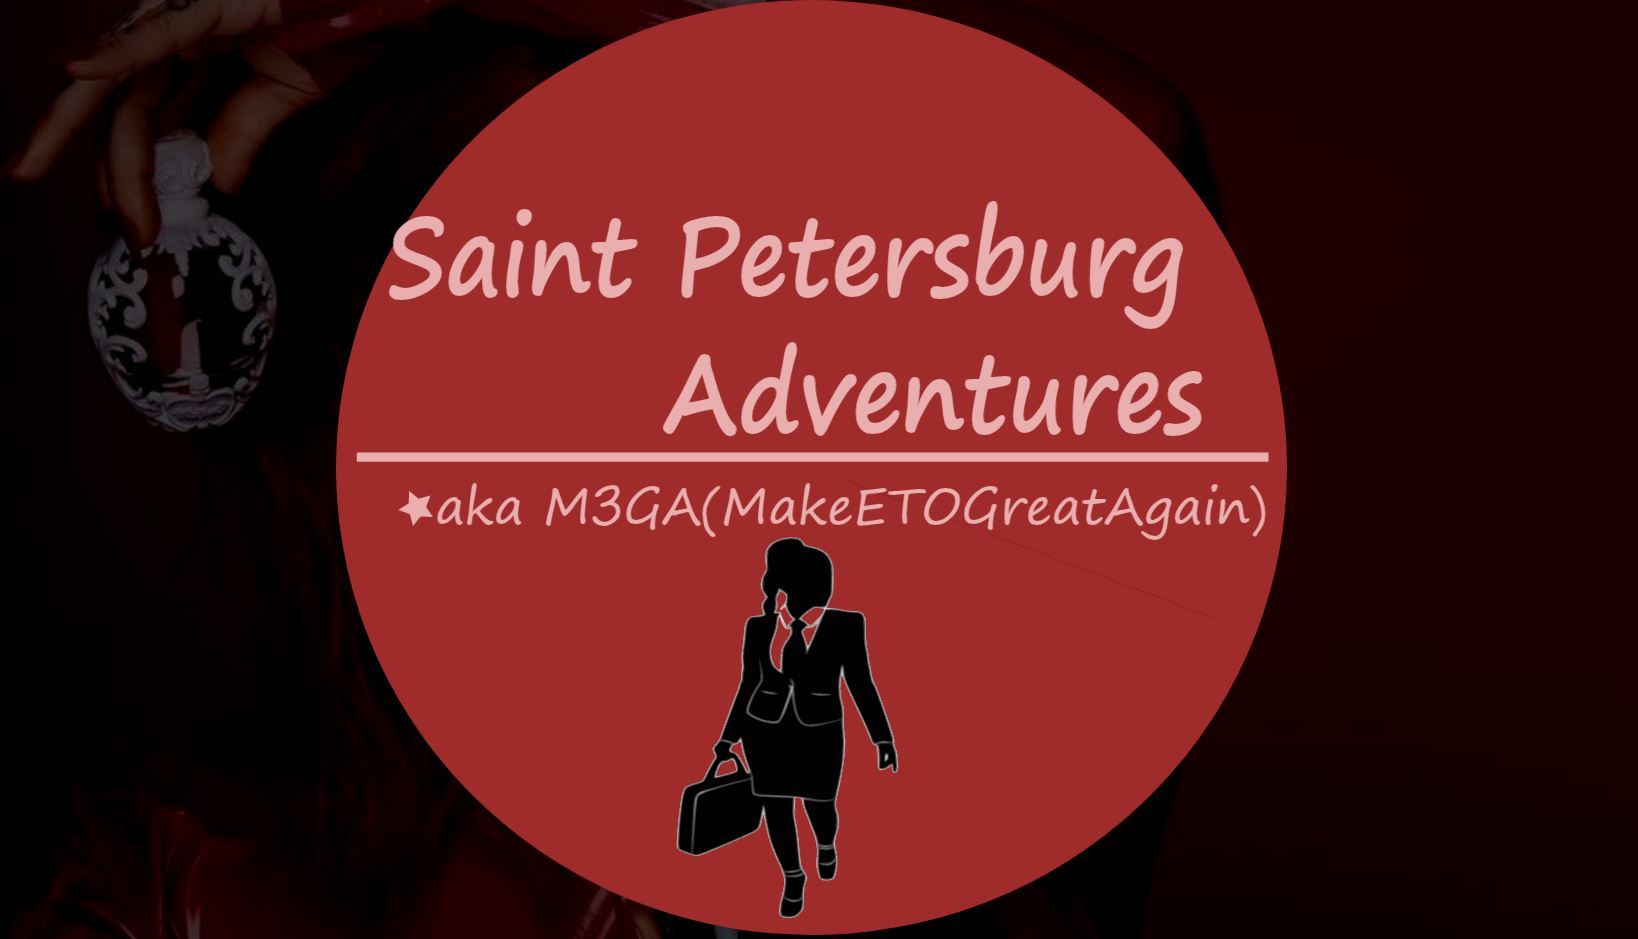 Saint Petersburg Adventures porn xxx game download cover